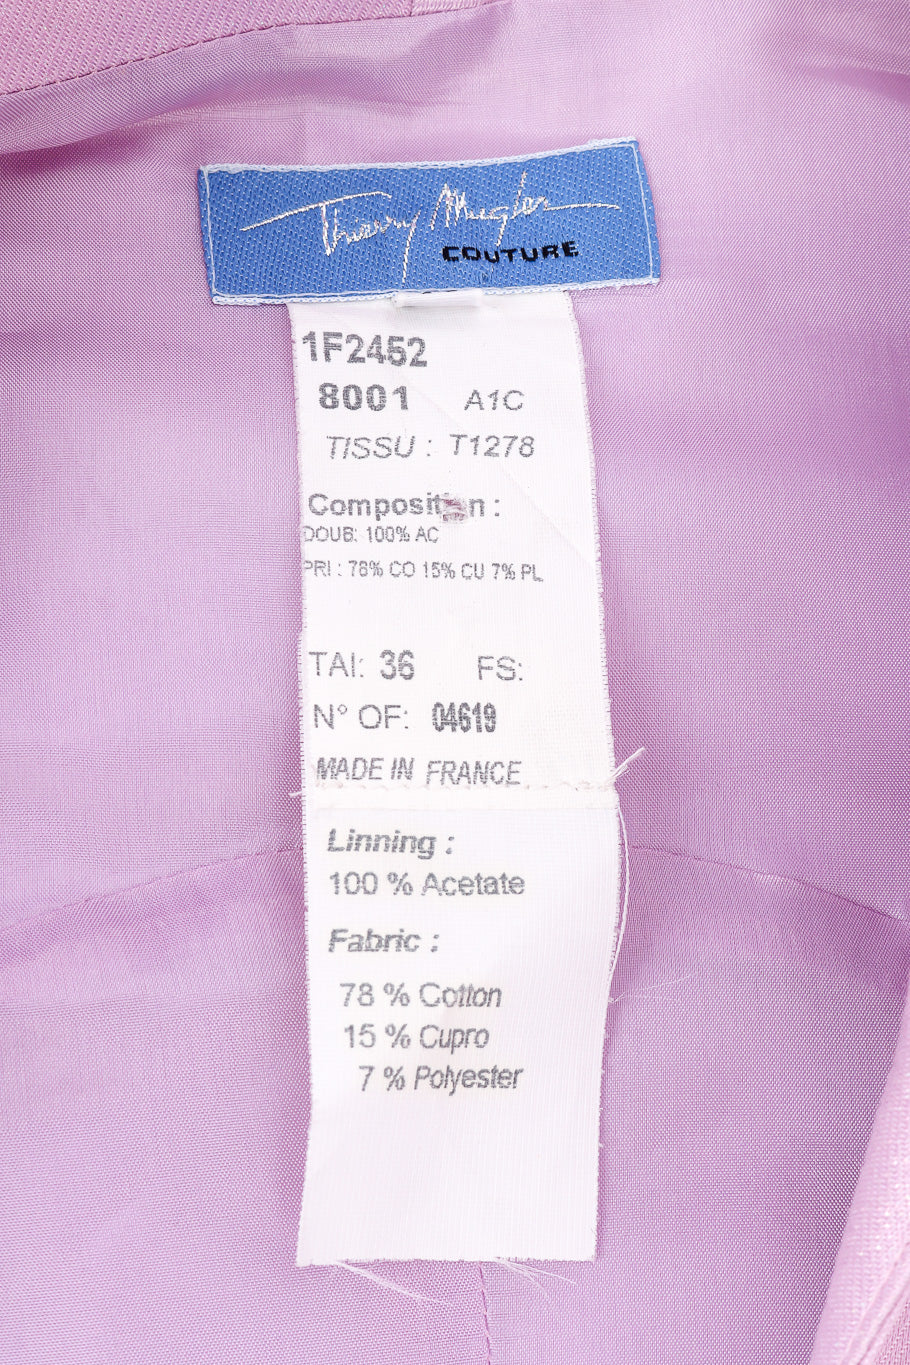 Lilac wrap dress by Thierry Mugler label @recessla